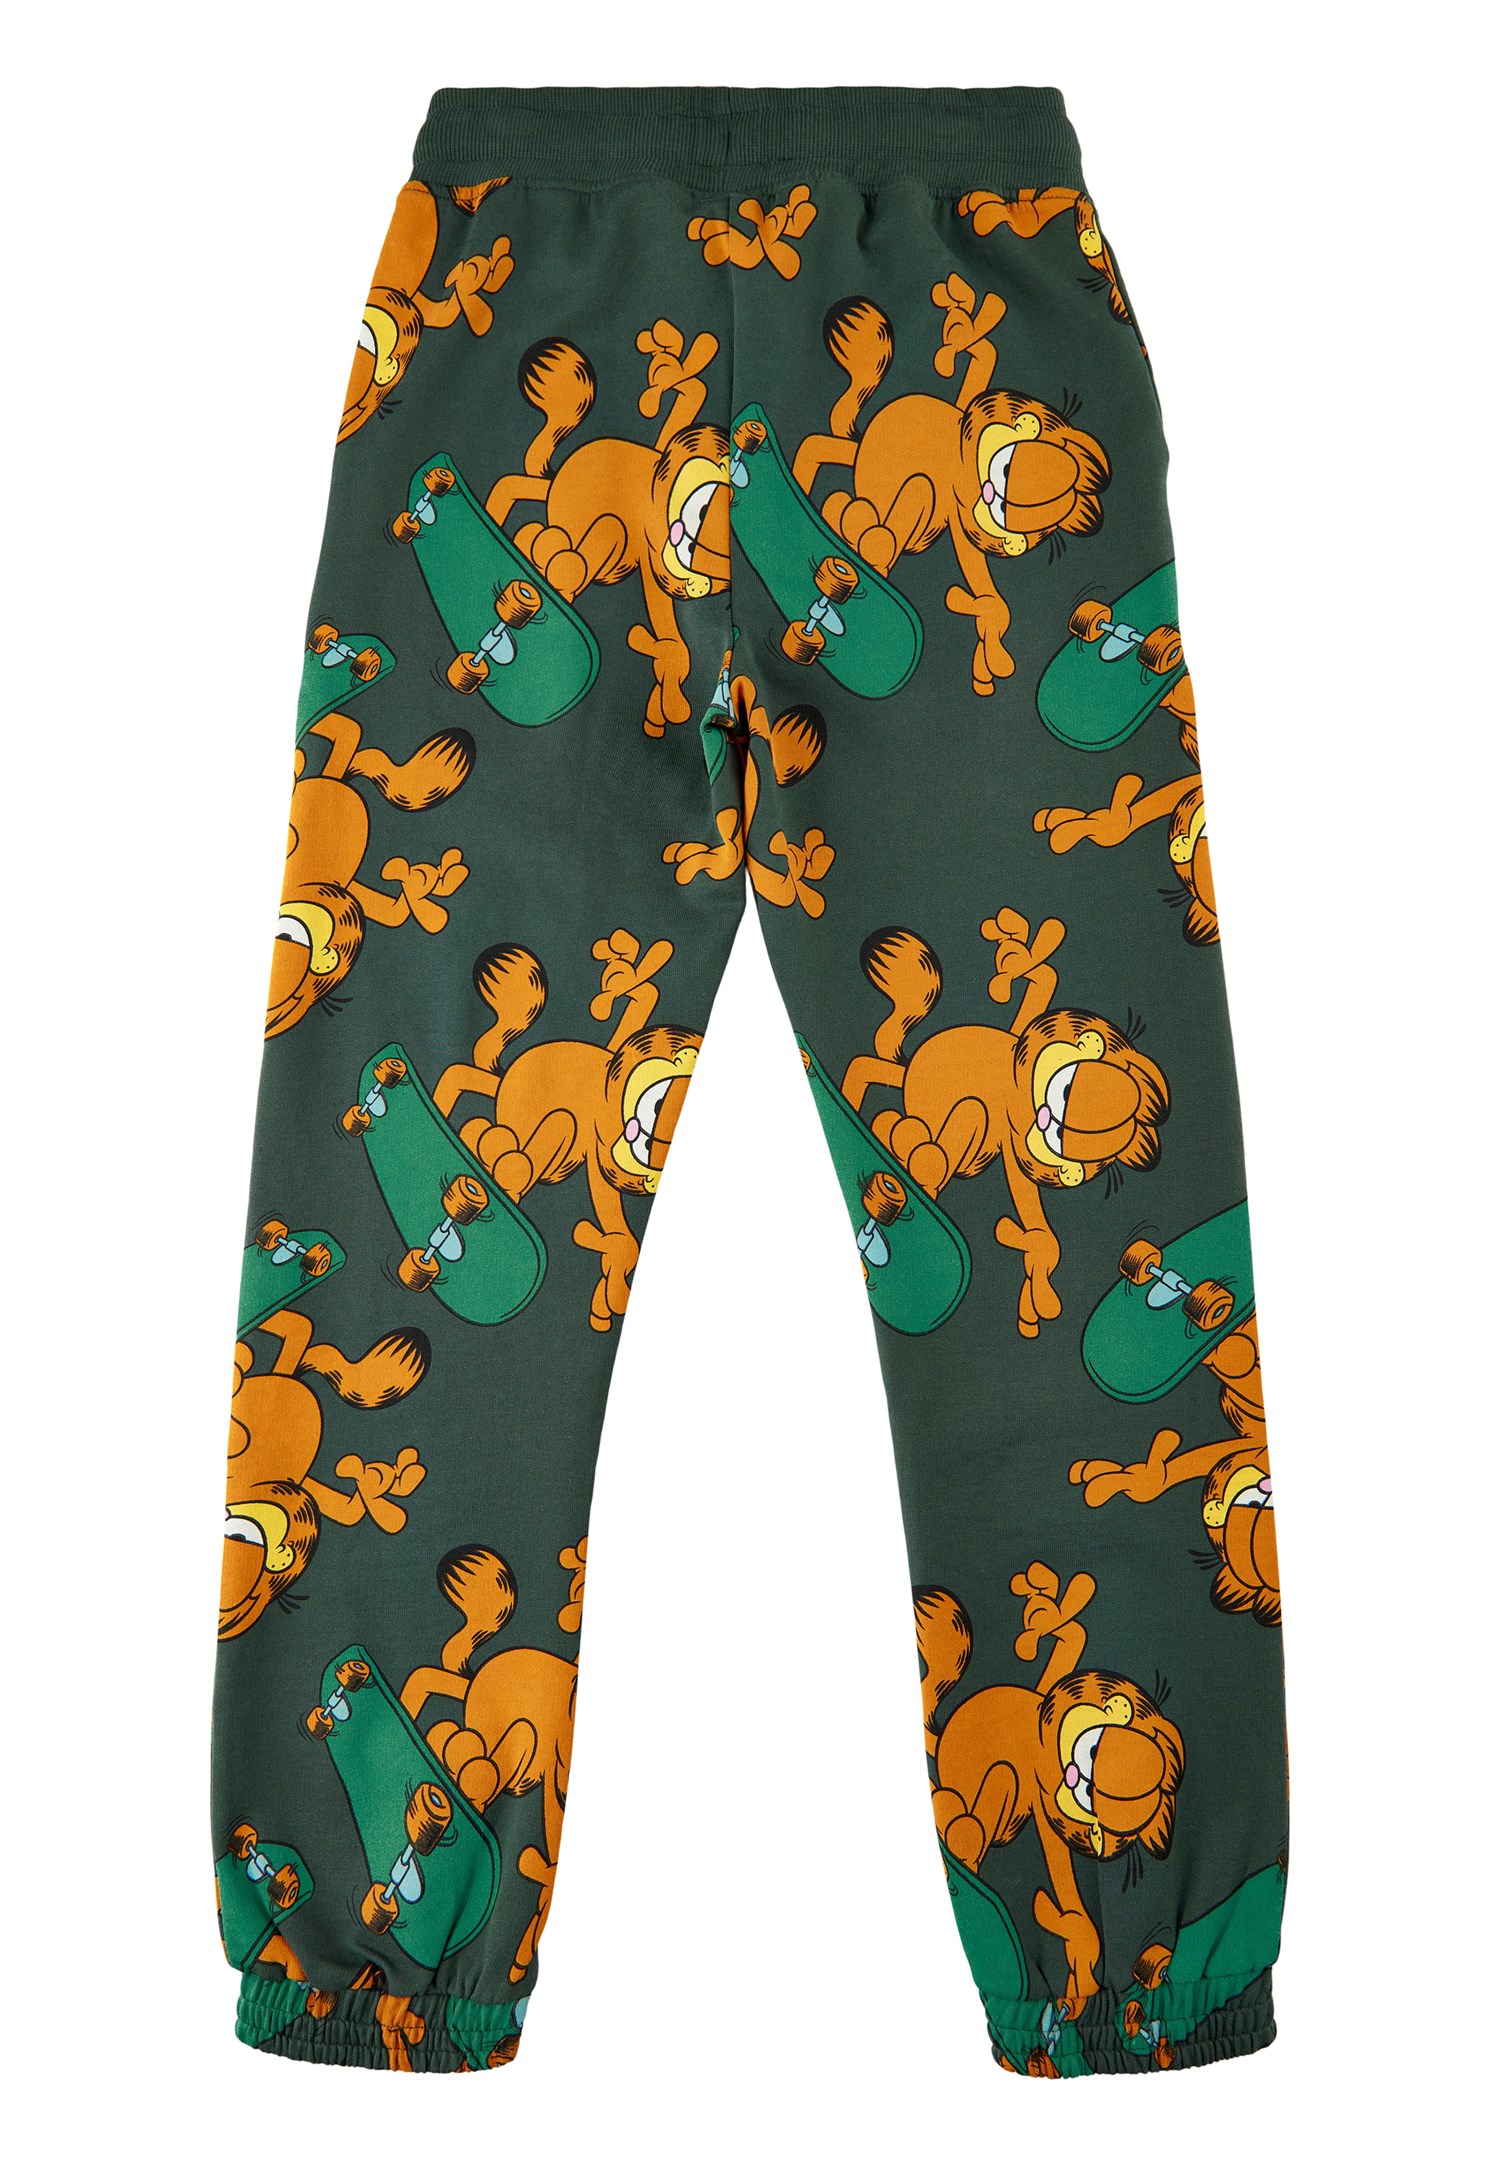 THE NEW - Garfield Sweatpants